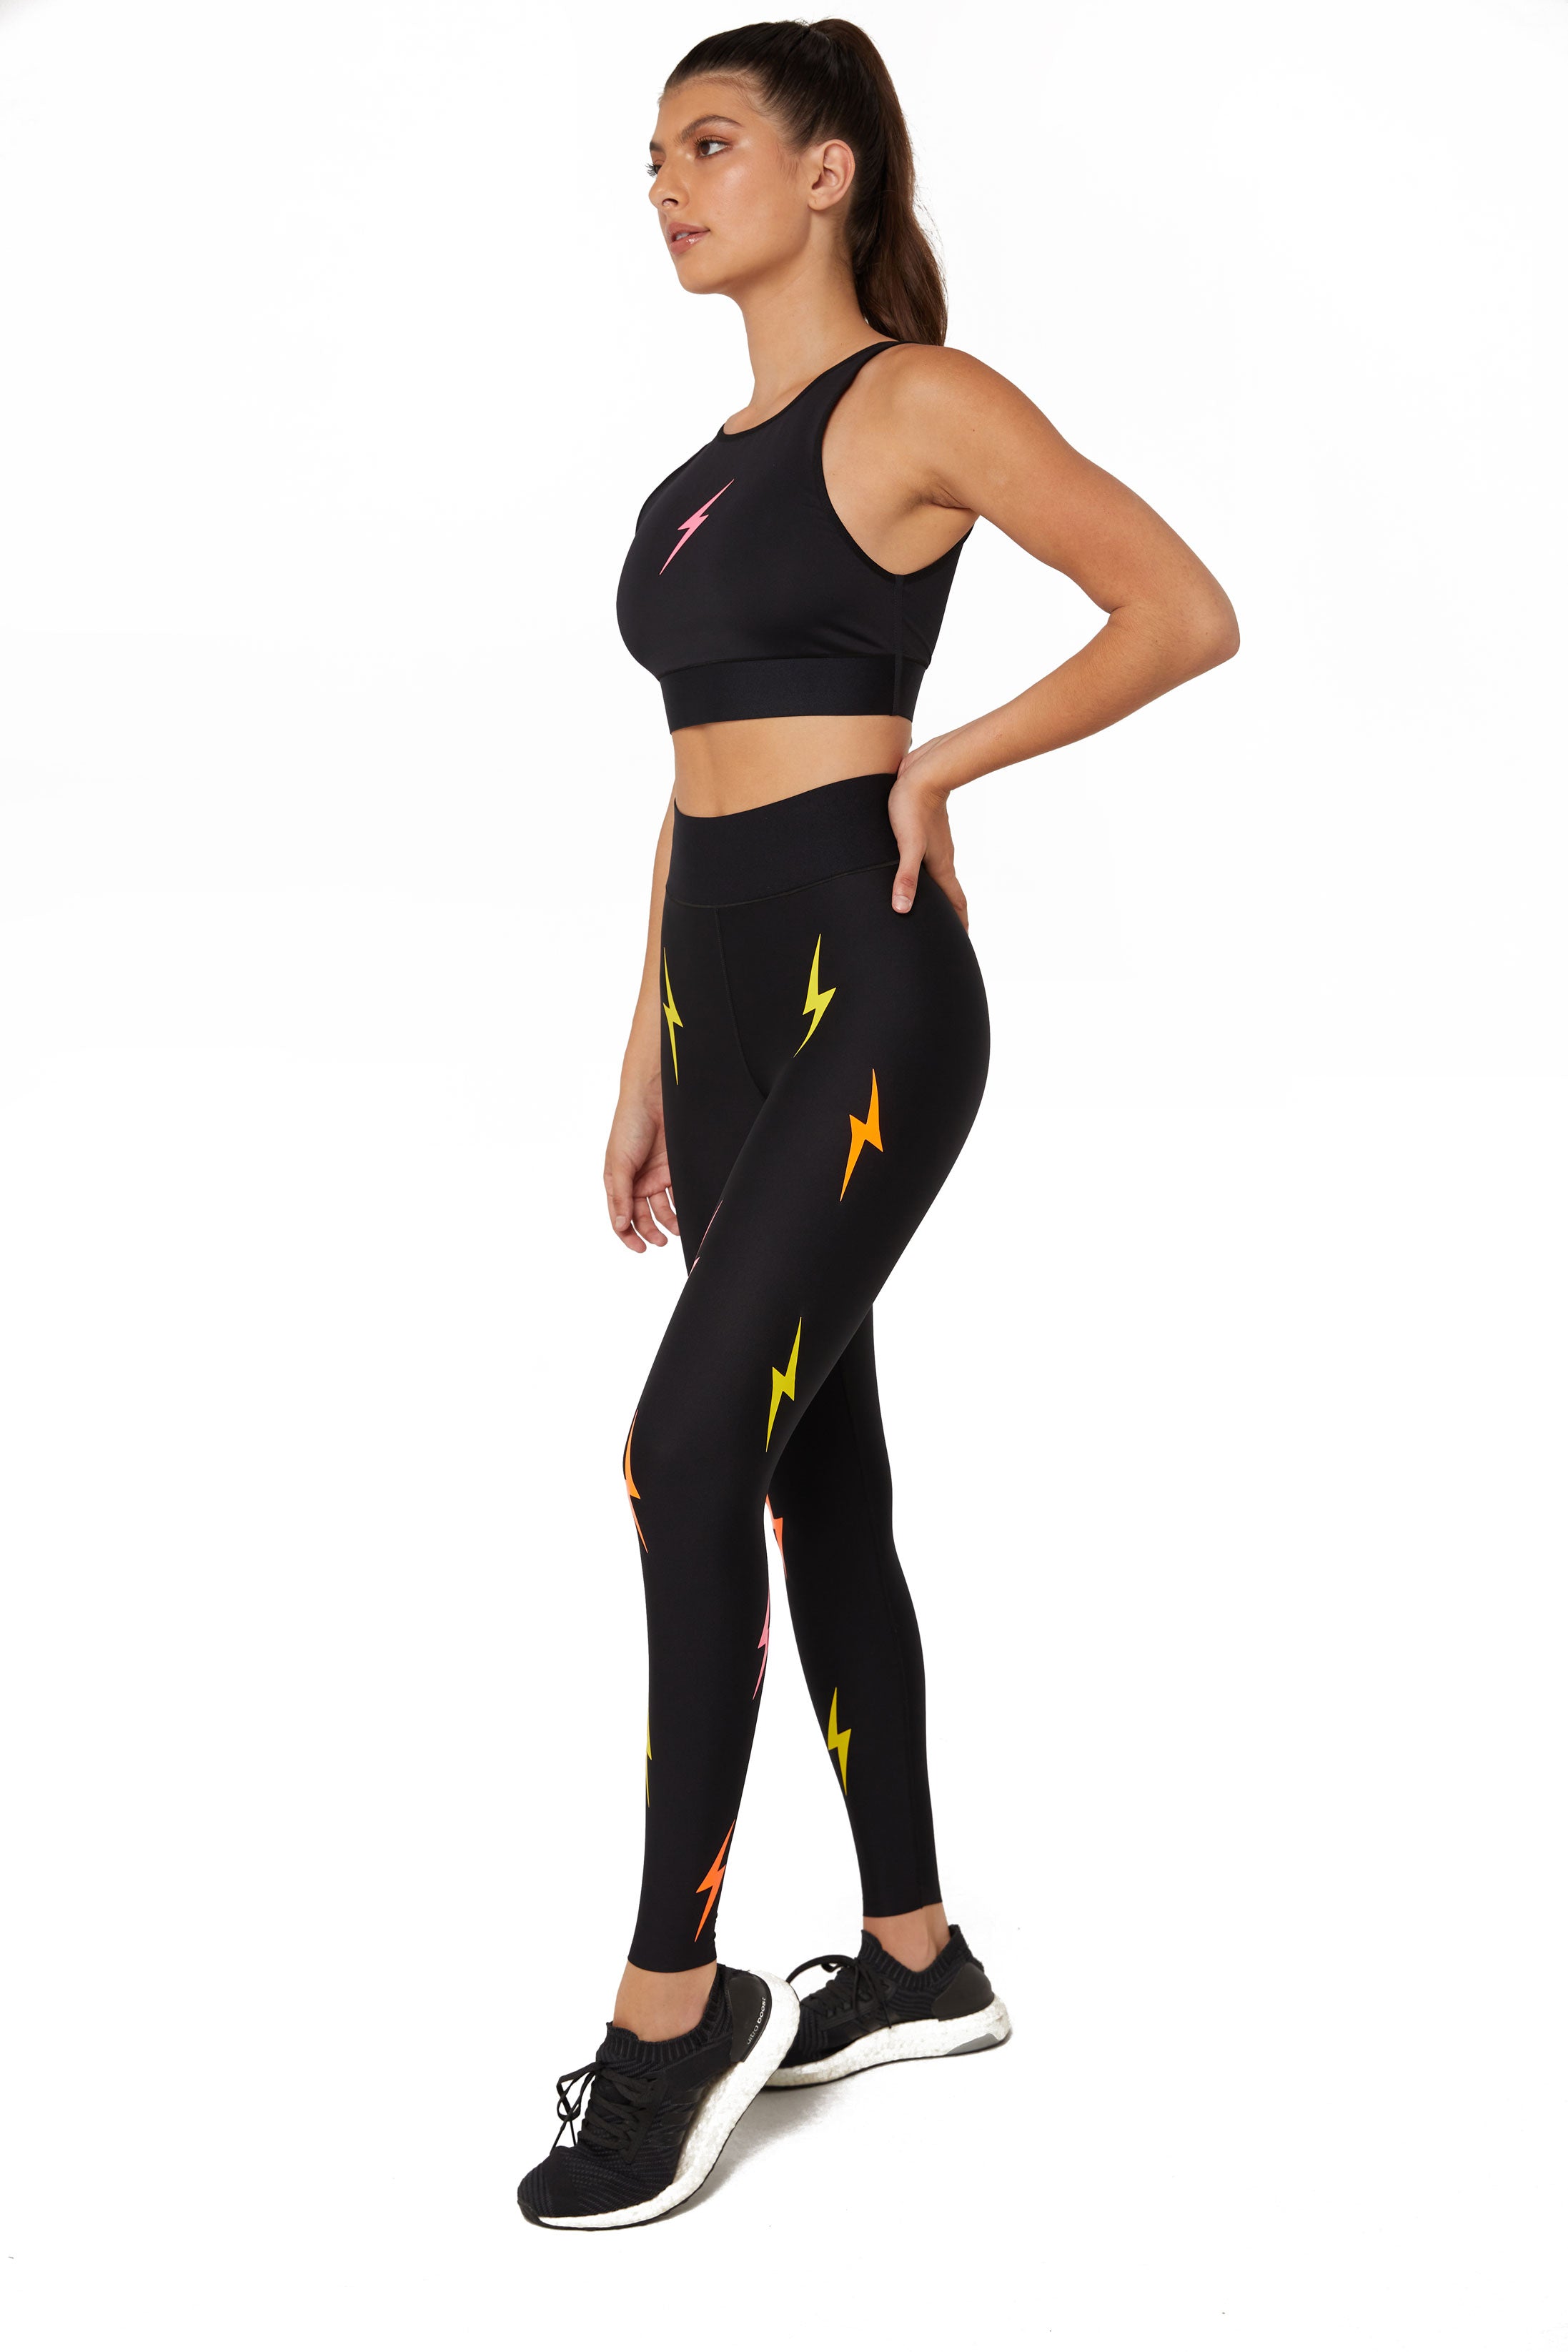 Electric Yoga Star Light Star Bright Women's Printed High Rise Fitness  Leggings 